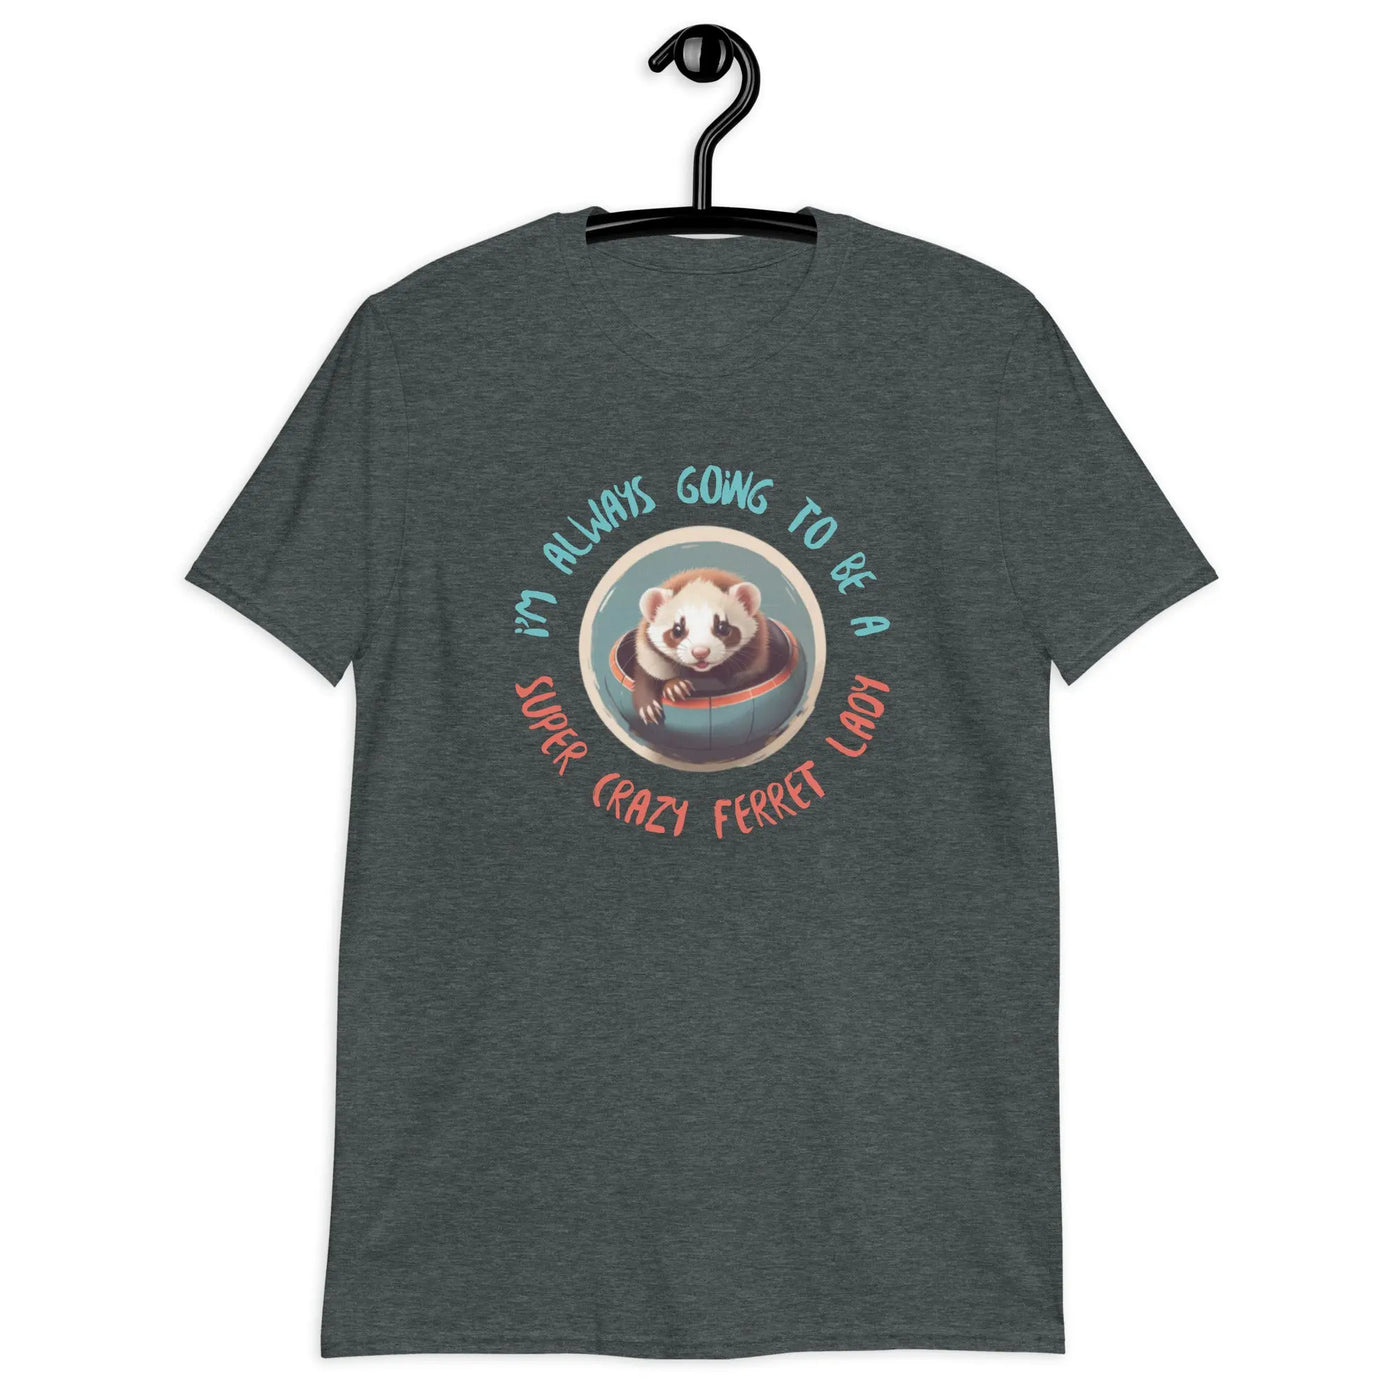 Amanda's Crazy Ferret T-Shirt CRZYTEE